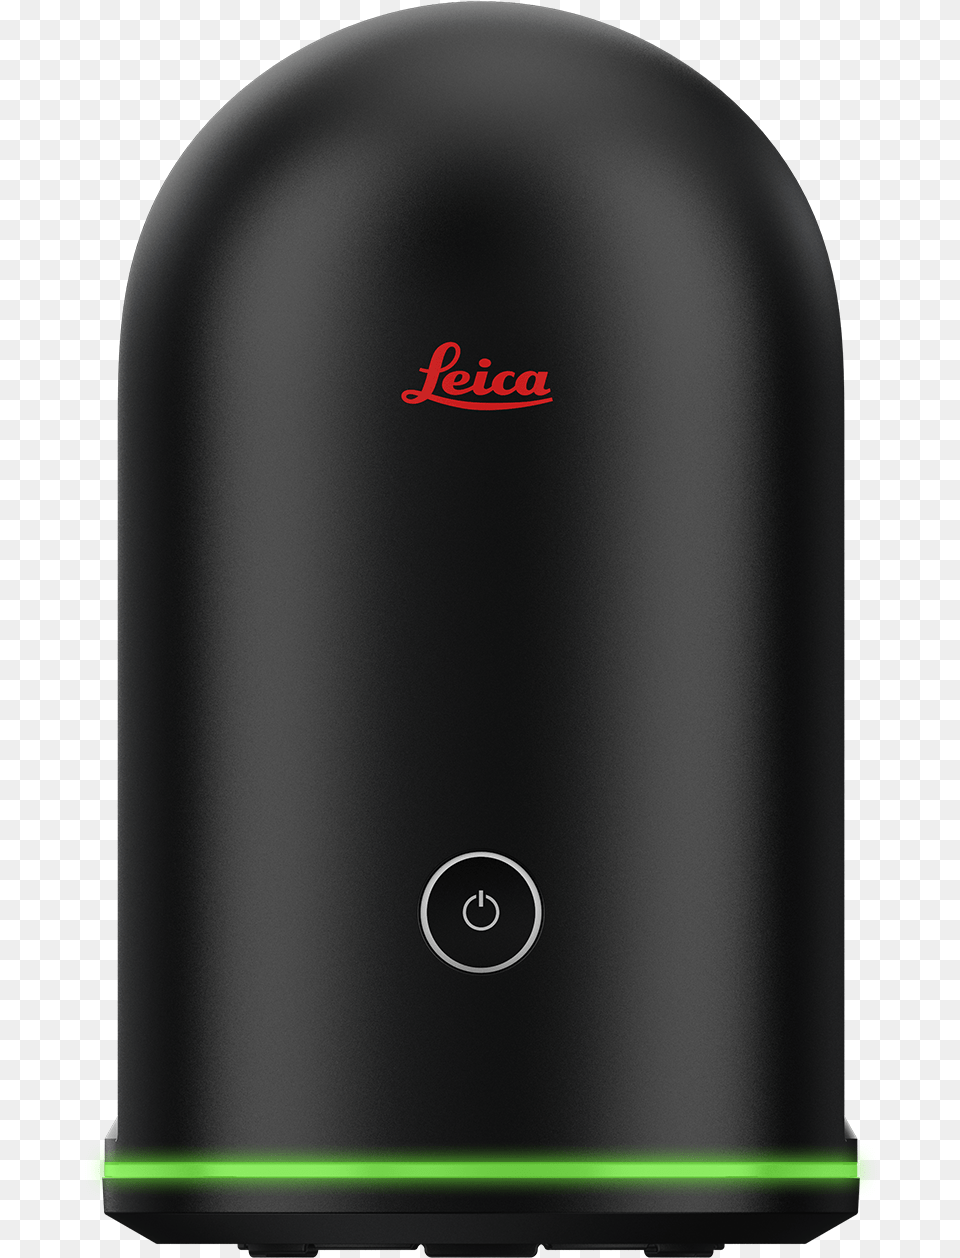 Leica Blk360 Icon Software, Clothing, Swimwear, Electronics, Hardware Png Image